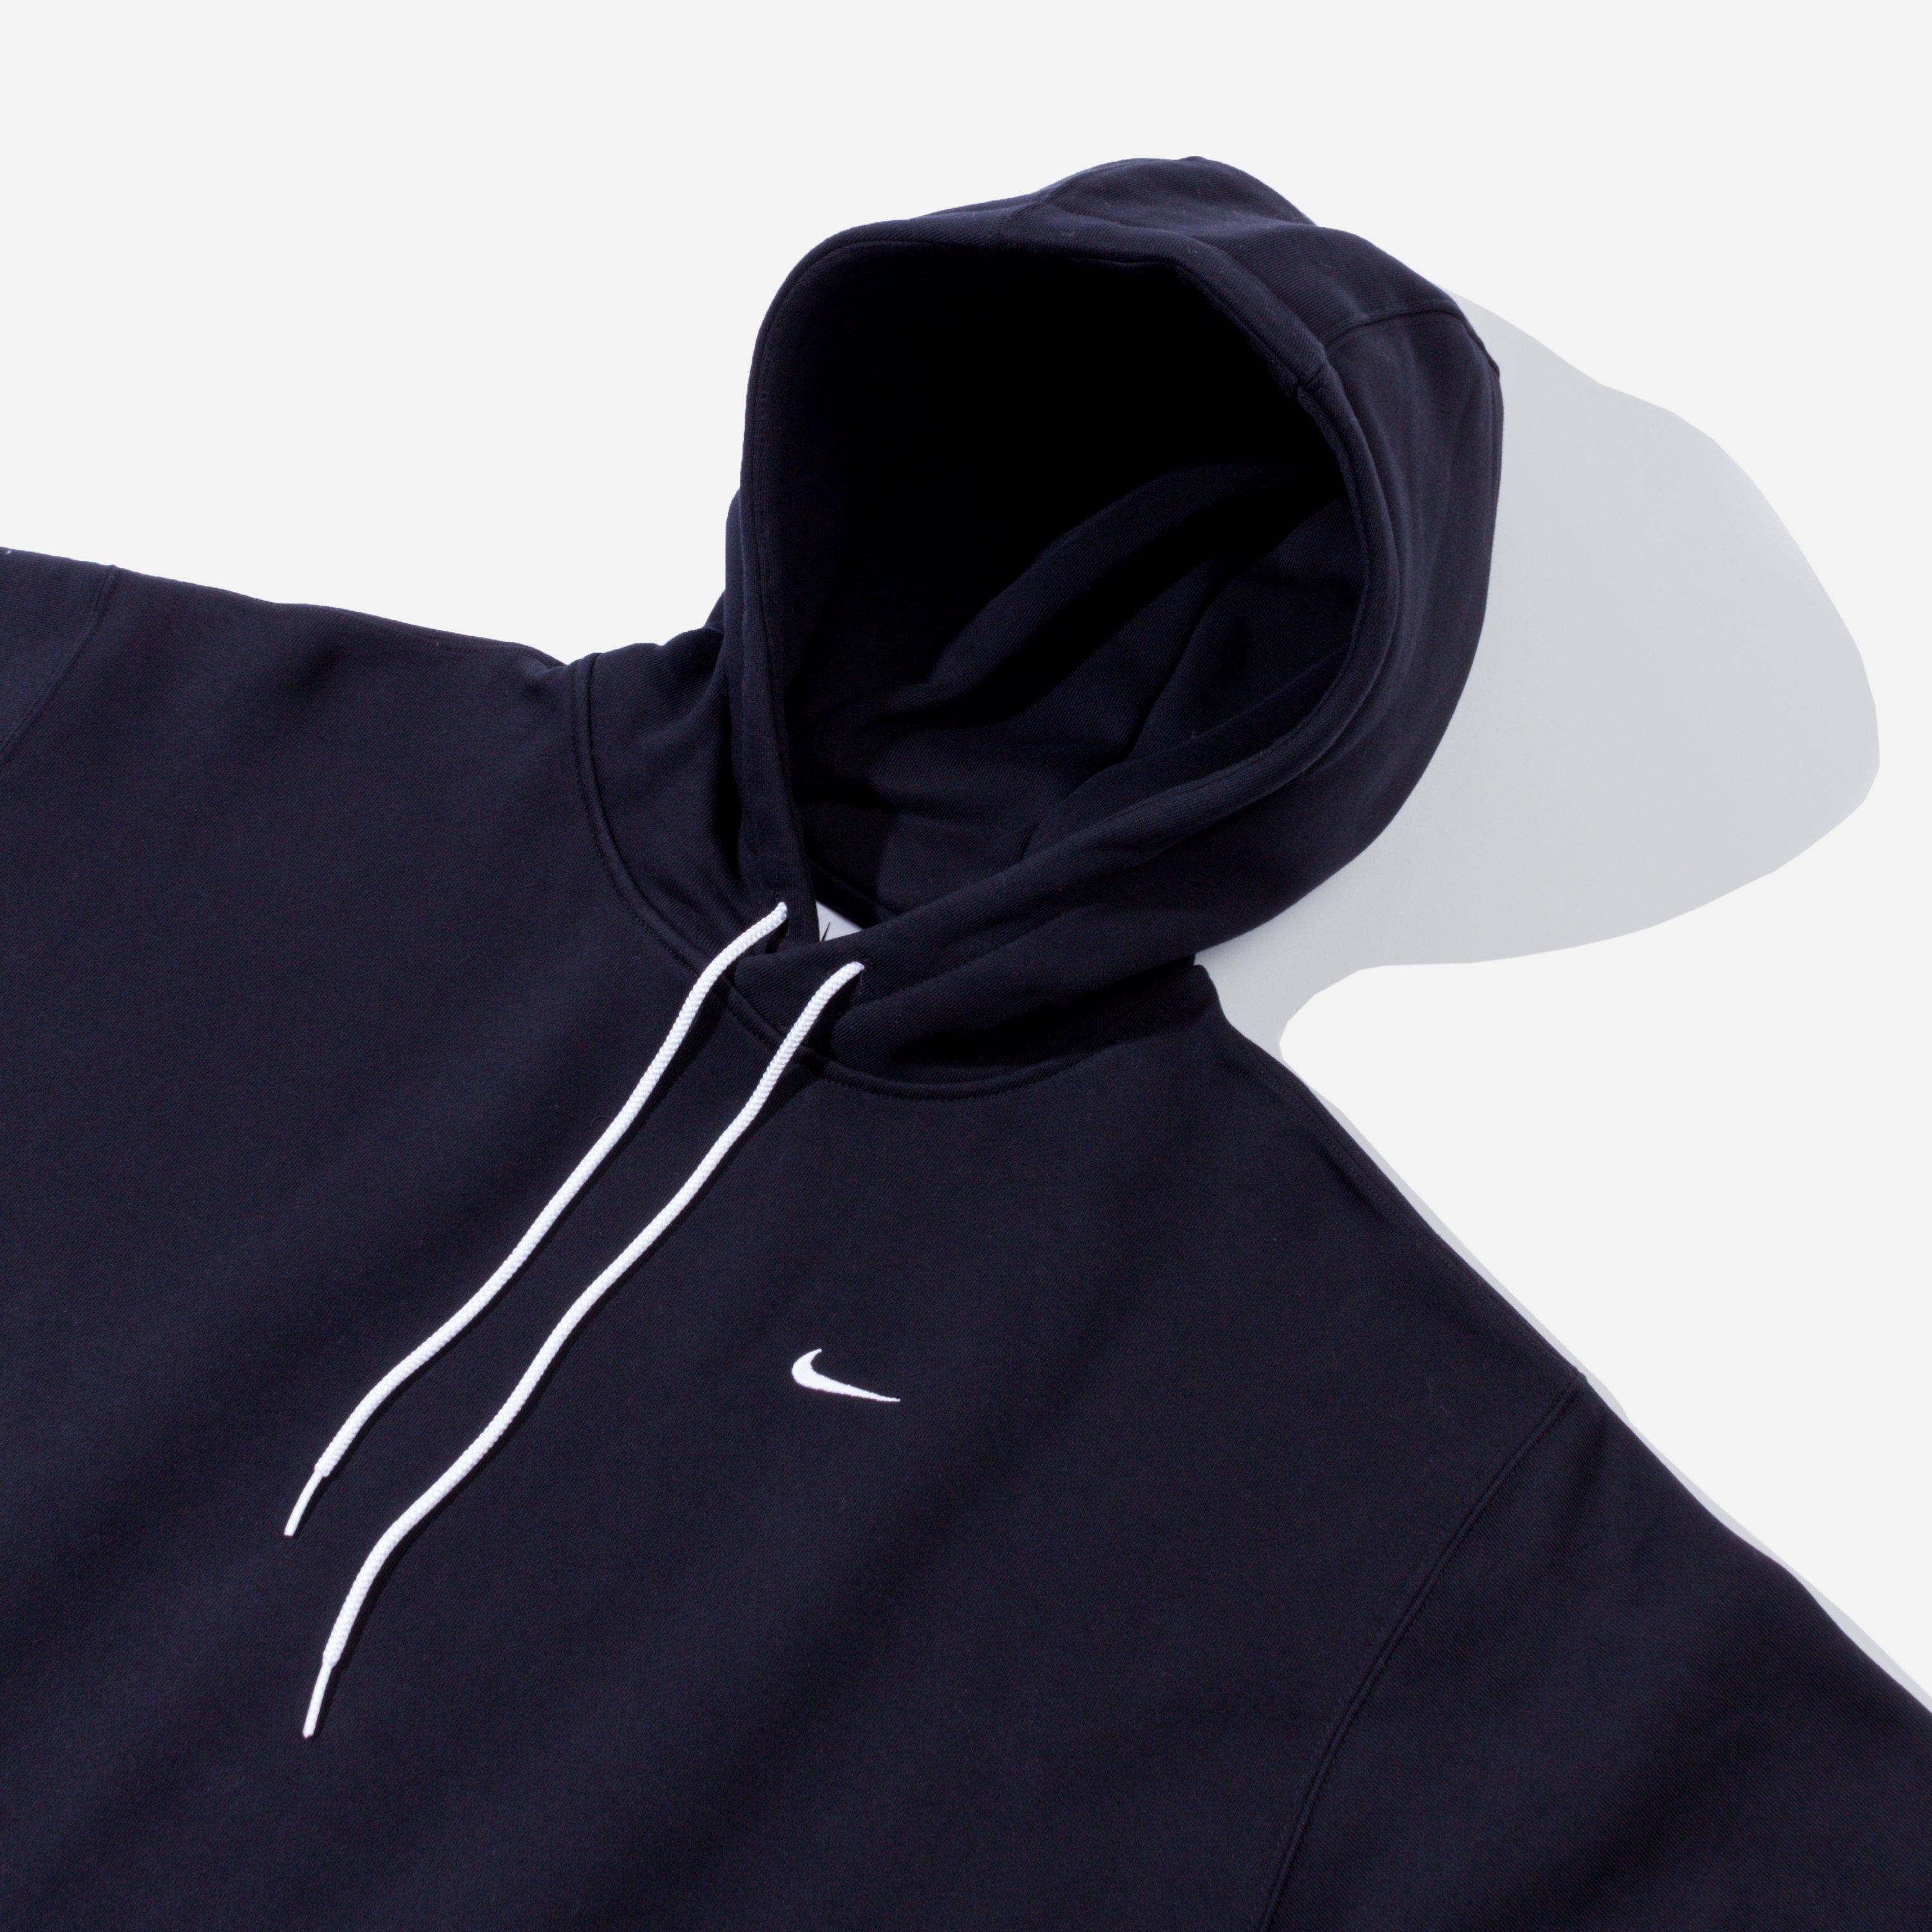 Nike Cotton Nrg Fleece Hoodie in Black for Men - Lyst